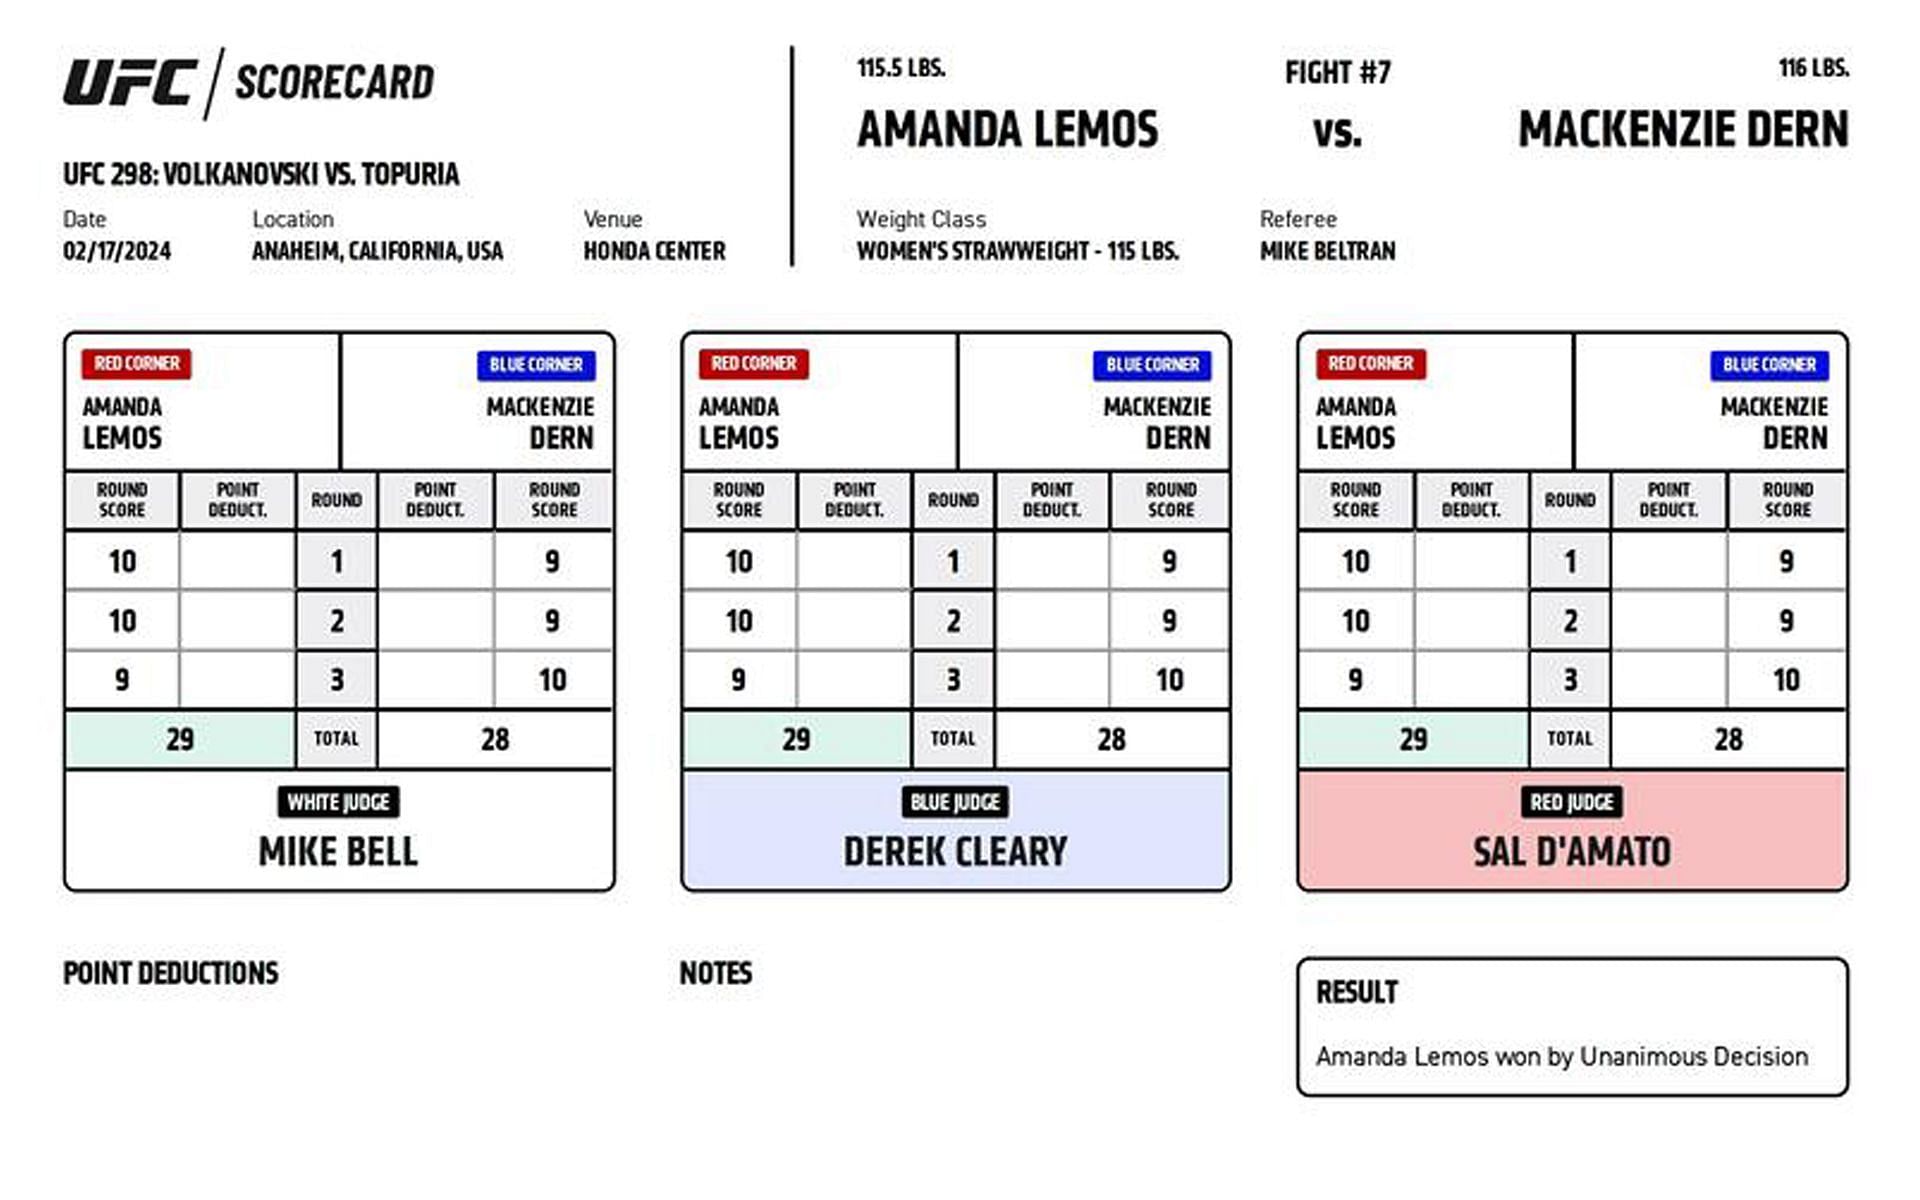 Amanda Lemos def. Mackenzie Dern via unanimous decision (29-28 X 3)